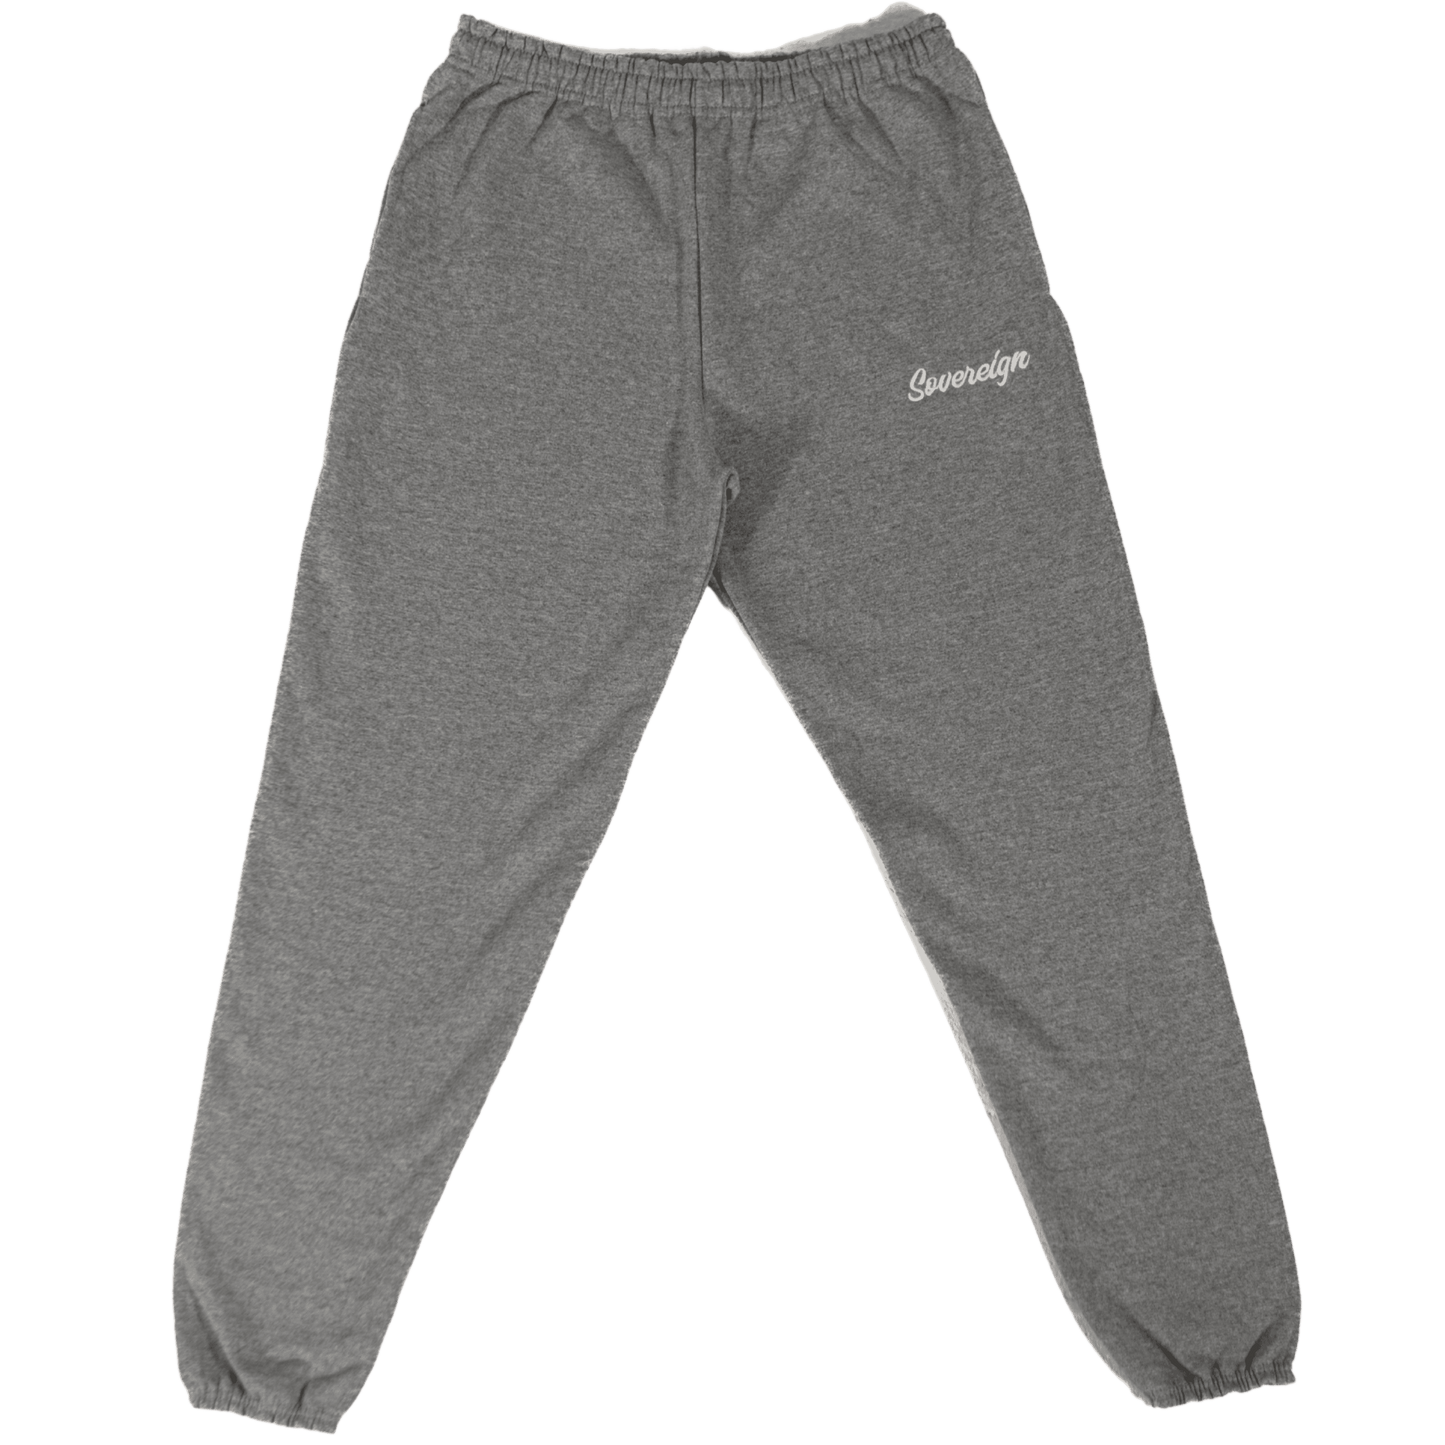 Sovereign Lifestyle Baggy Oversized Sweatpants Grey and Black Cursive Script